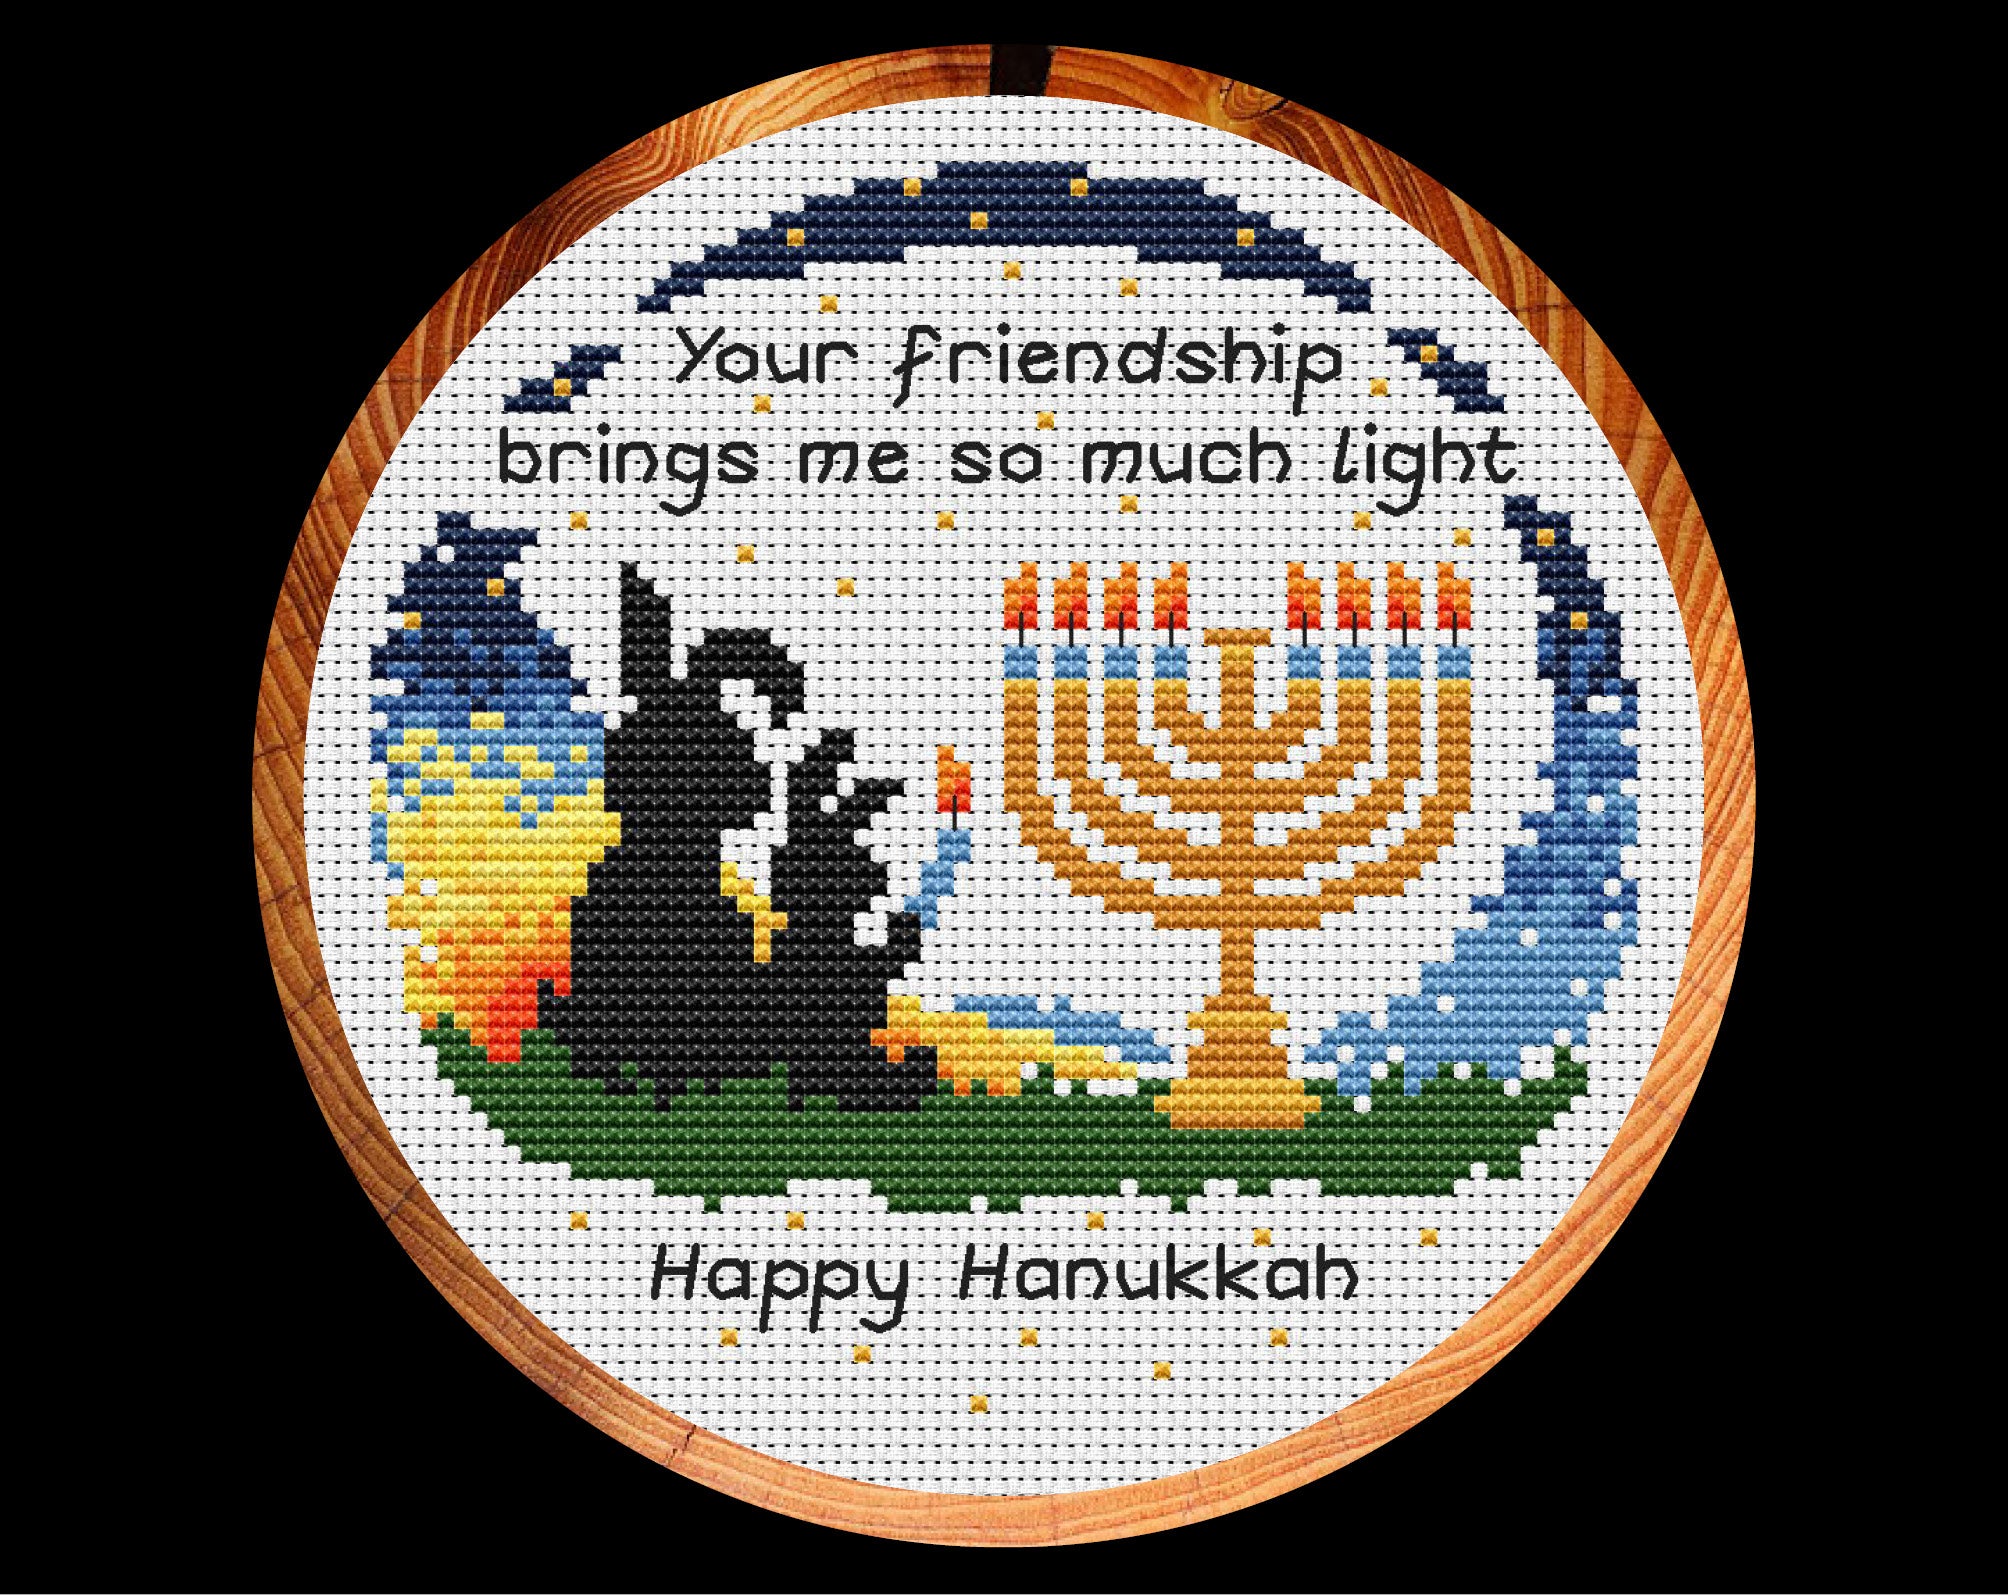 Hanukkah Friendship cross stitch pattern. Bunnies lighting a menorah with the words 'Your friendship brings me so much light - Happy Hanukkah'. Shown in hoop.